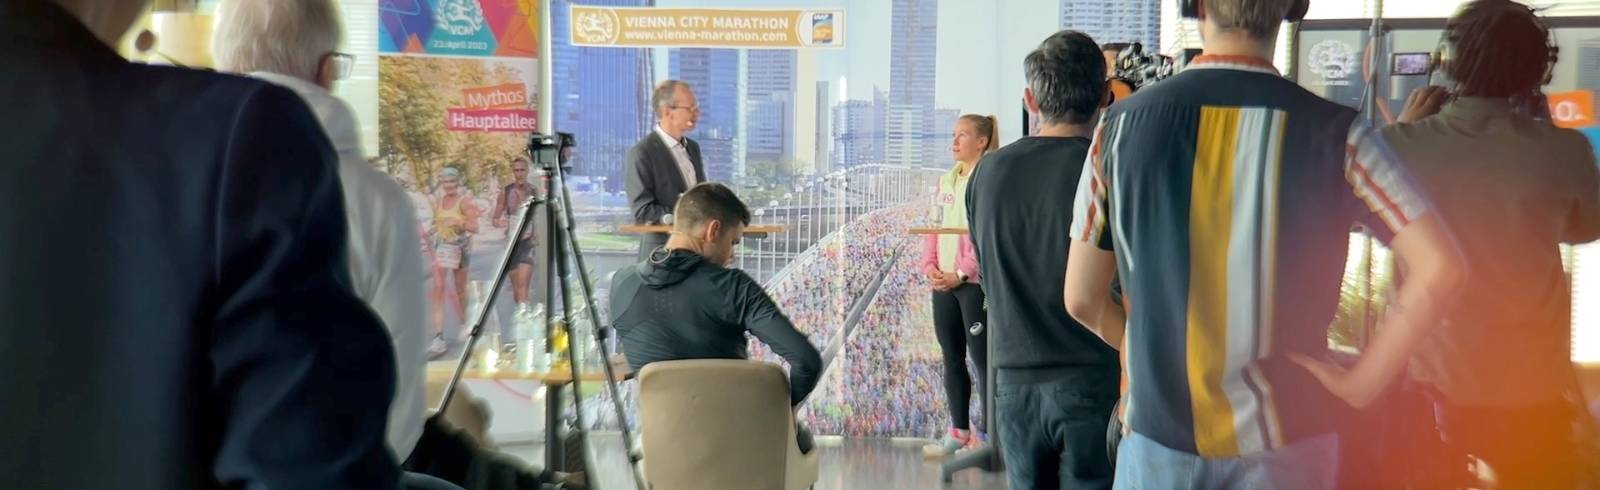 Vienna City Marathon: Lauf-Duo will zu Olympia